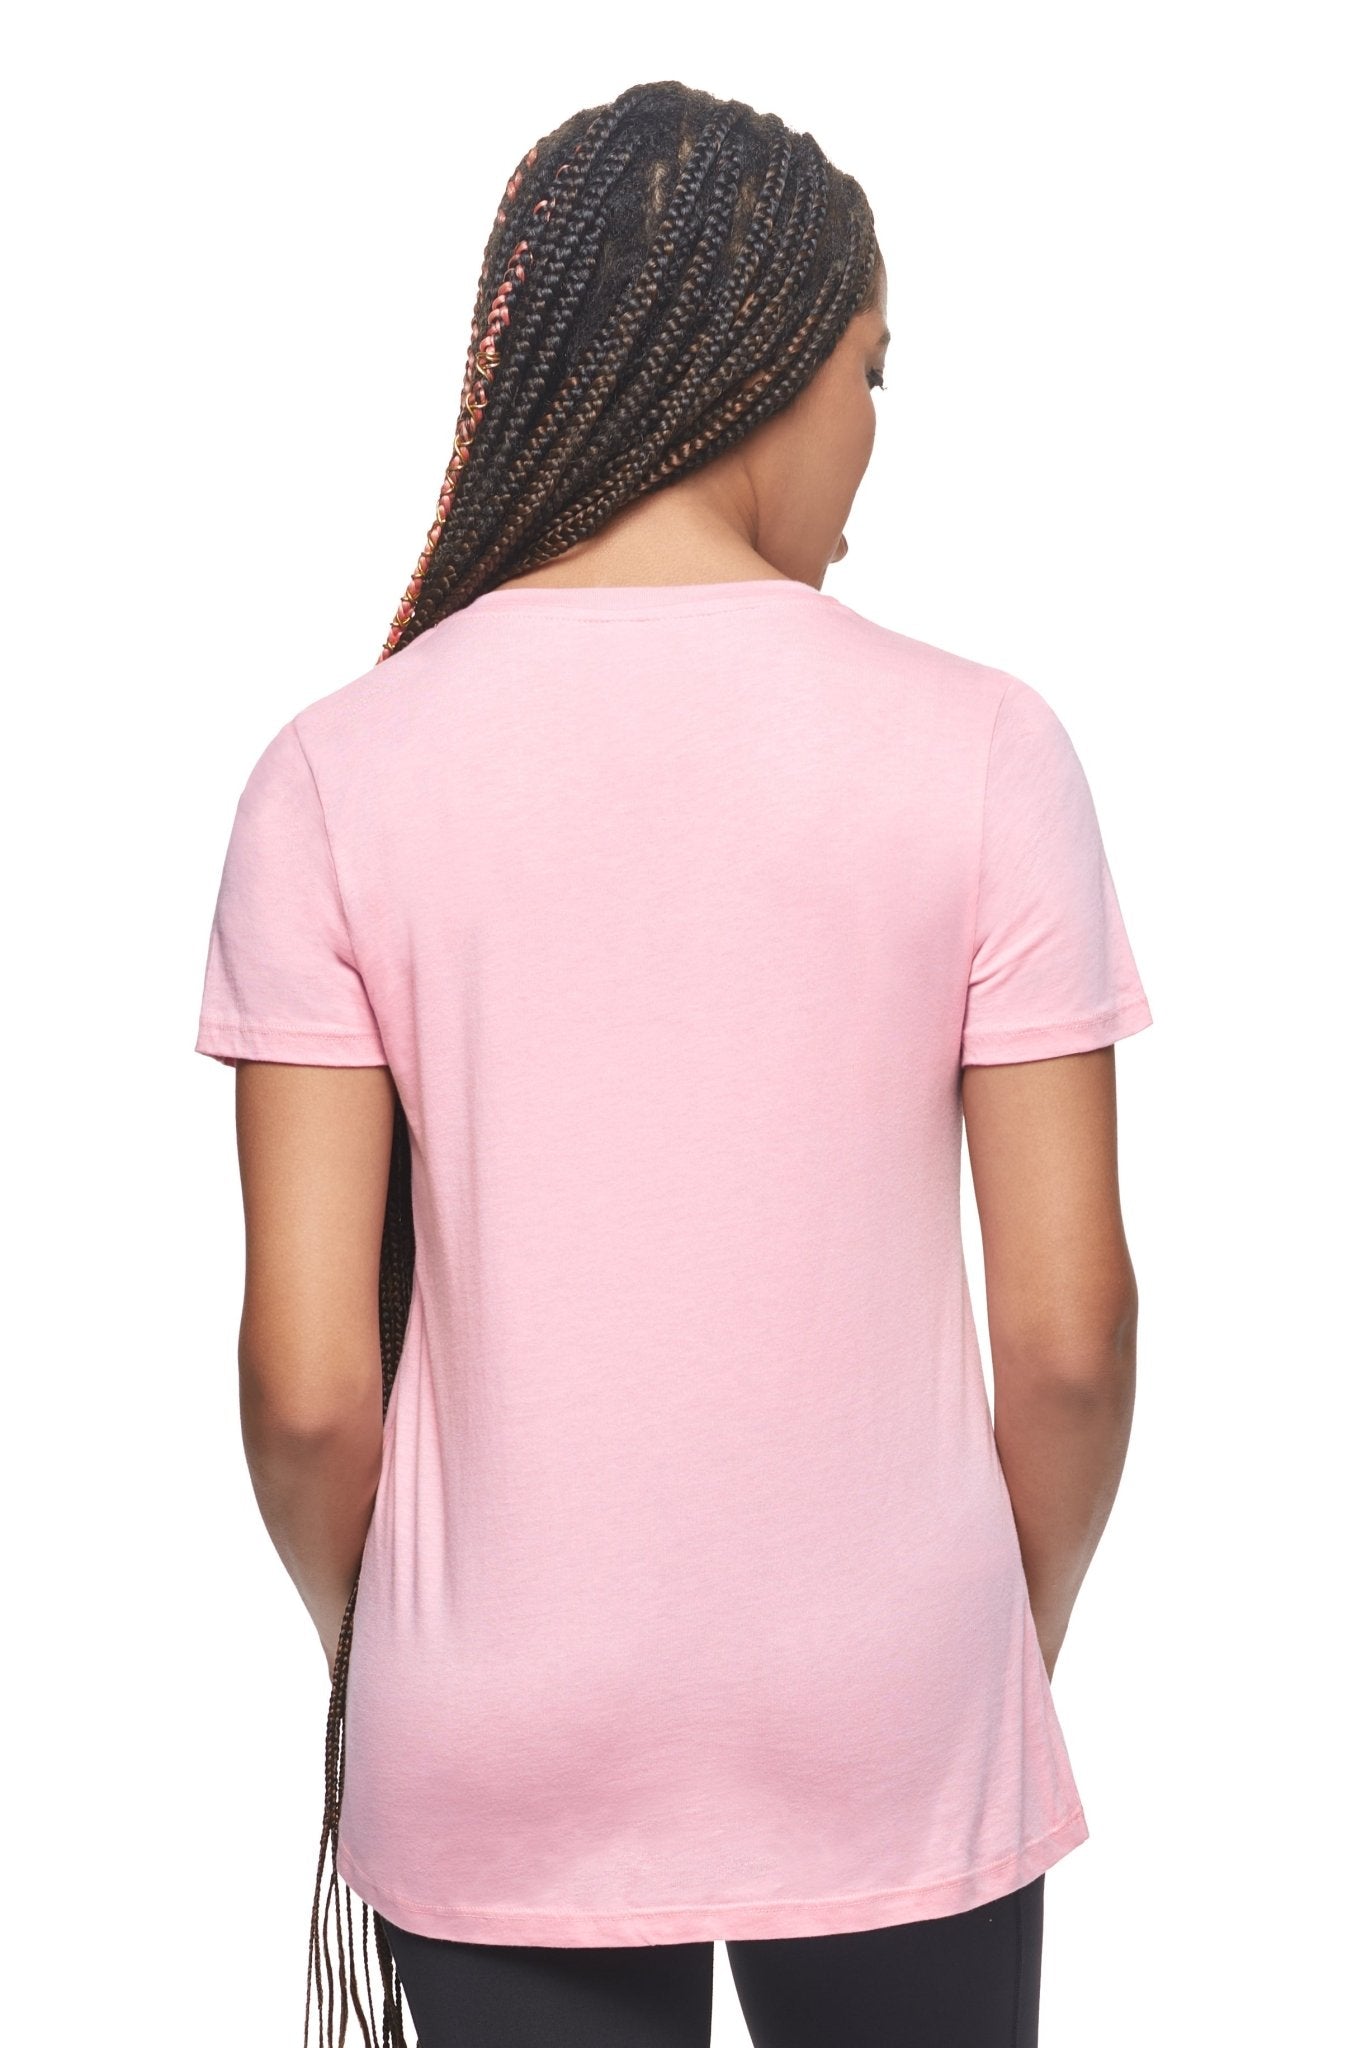 Expert Brand MoCA Plant Based V-Neck T-Shirt - Plus - DressbarnActivewear